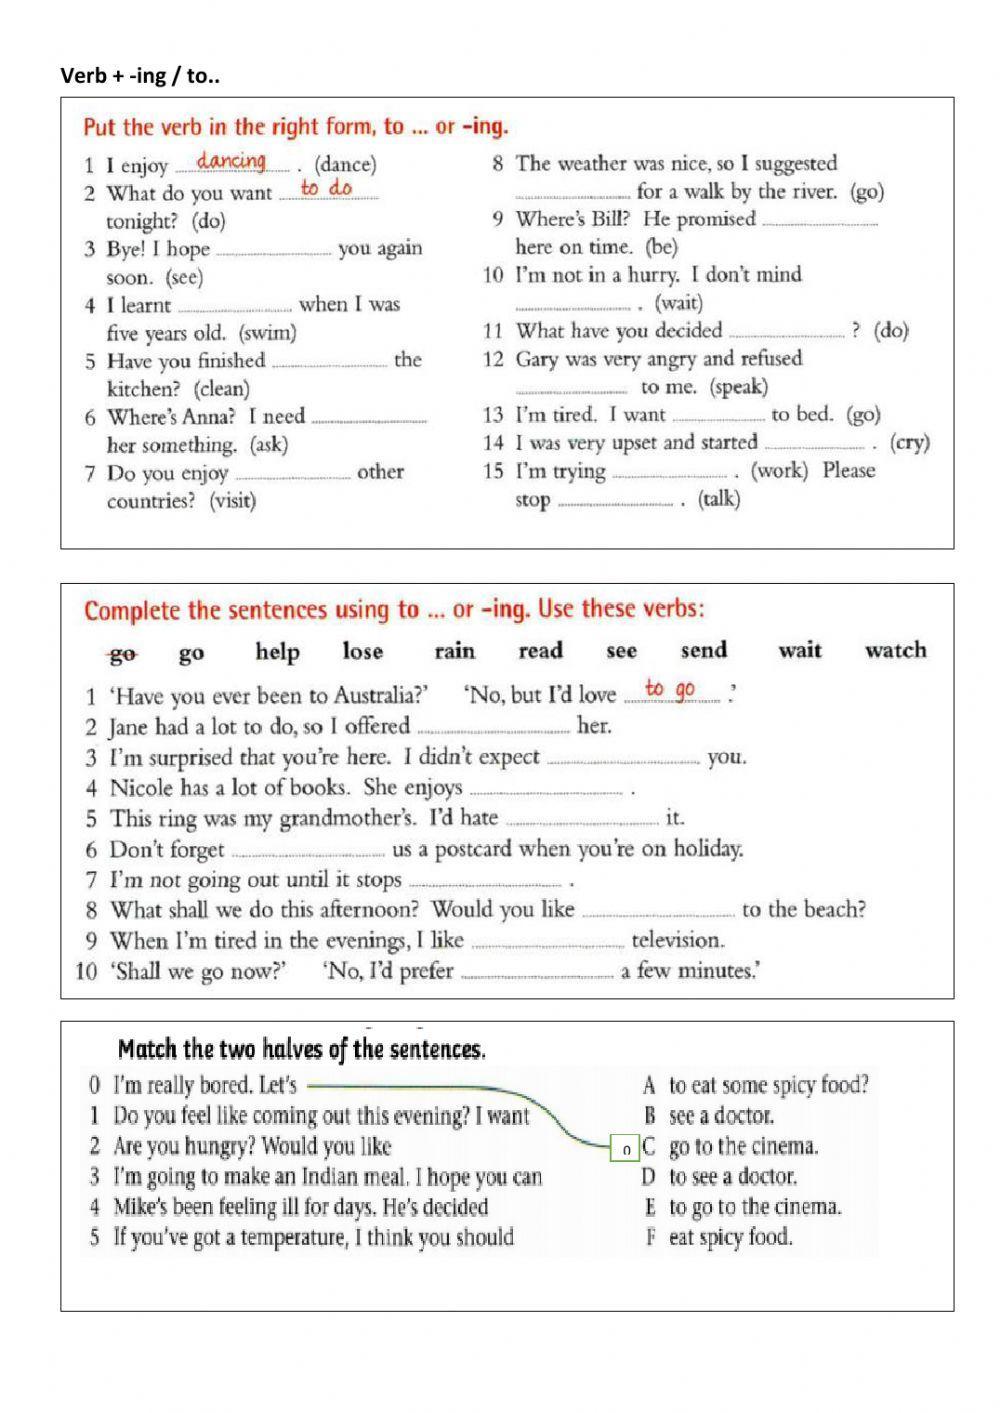 Advanced modal verbs practice key by Carol Williams - Issuu